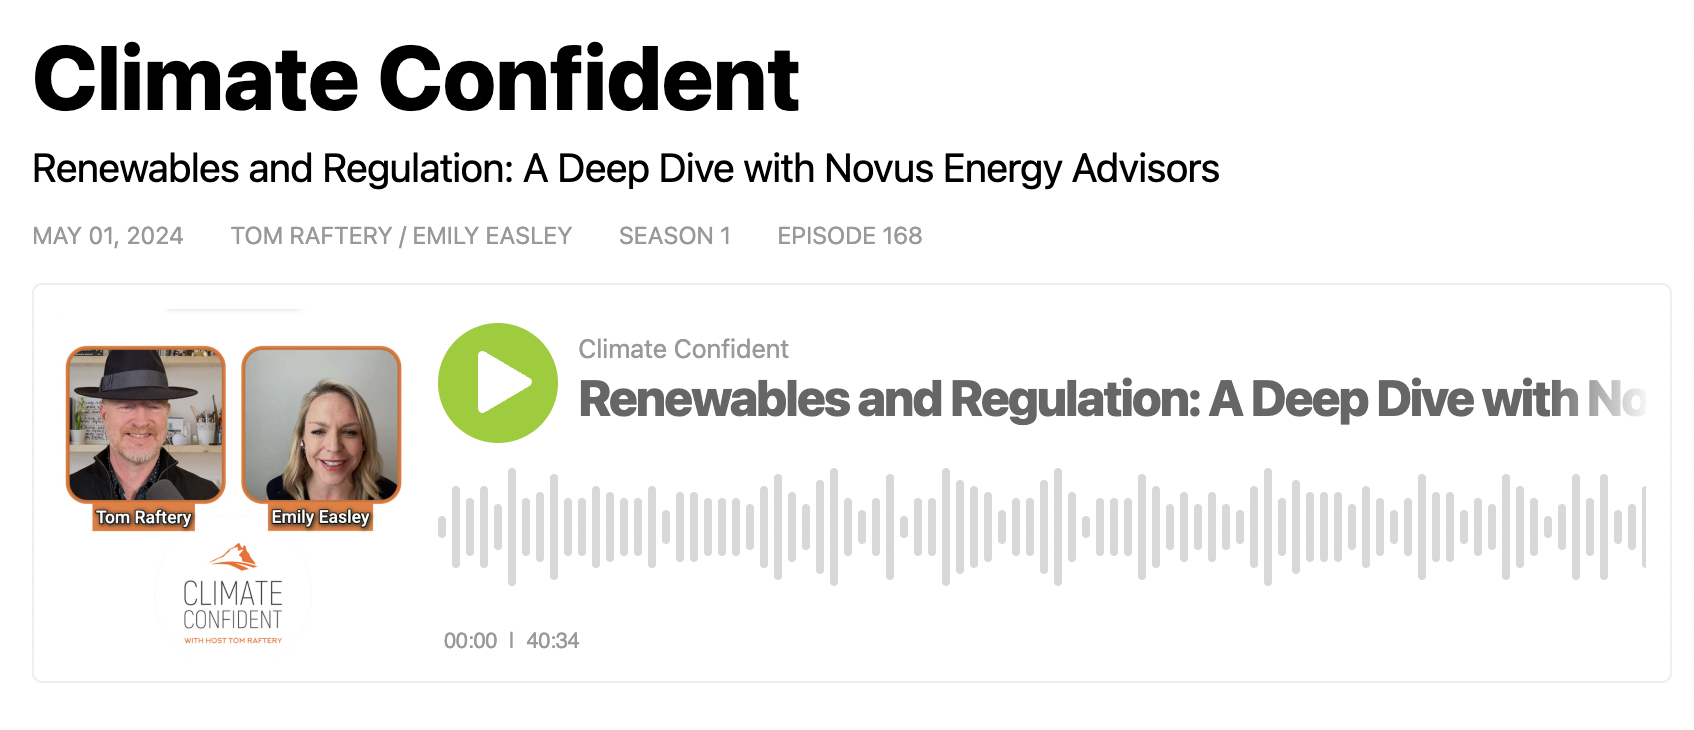 Renewables and Regulation: A Deep Dive with NOVUS Energy Advisors